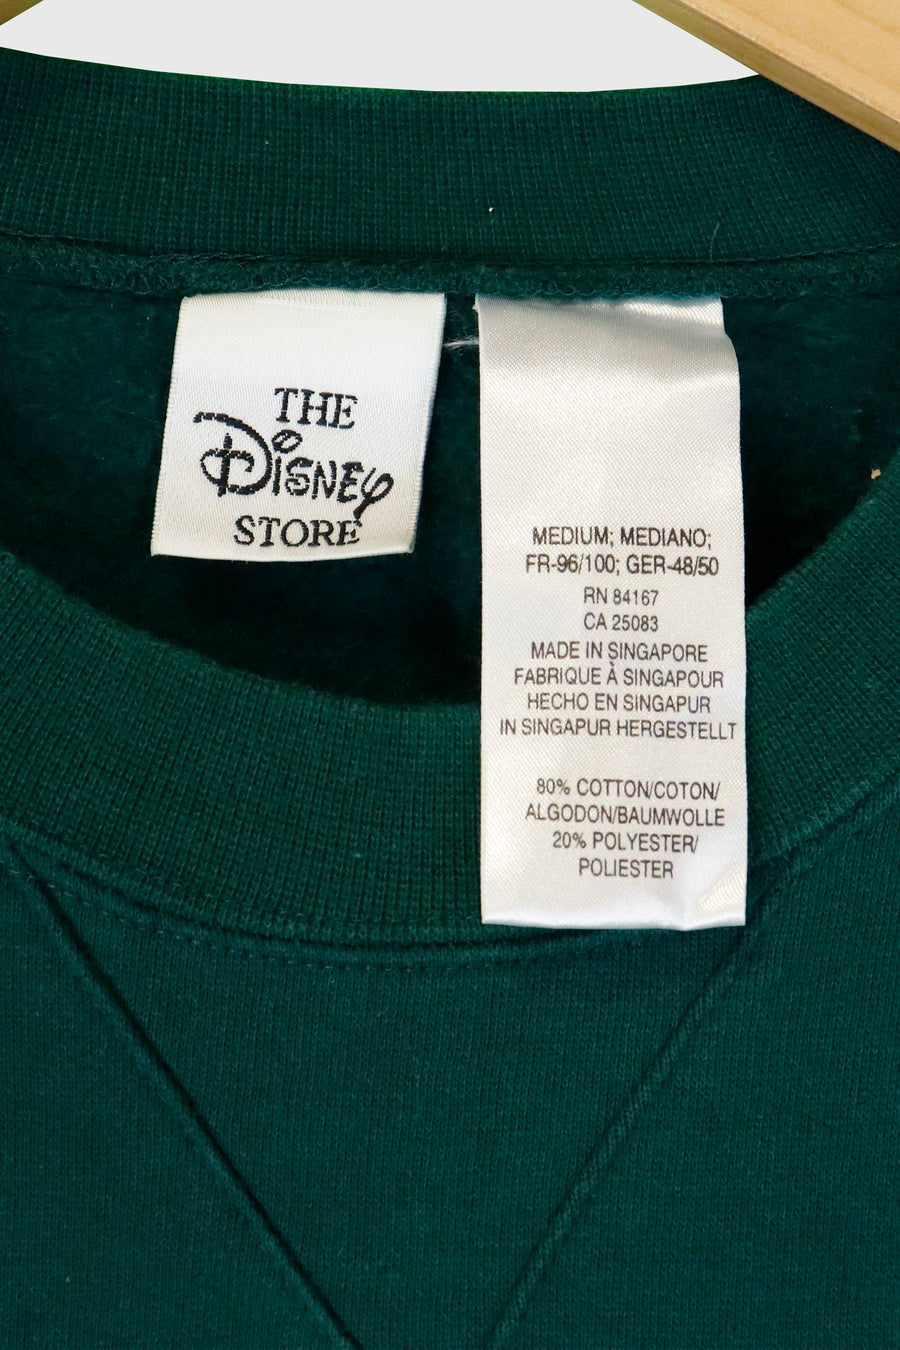 Vintage Disney Embroidered Winnie The Pooh Characters Sweatshirt Sz M